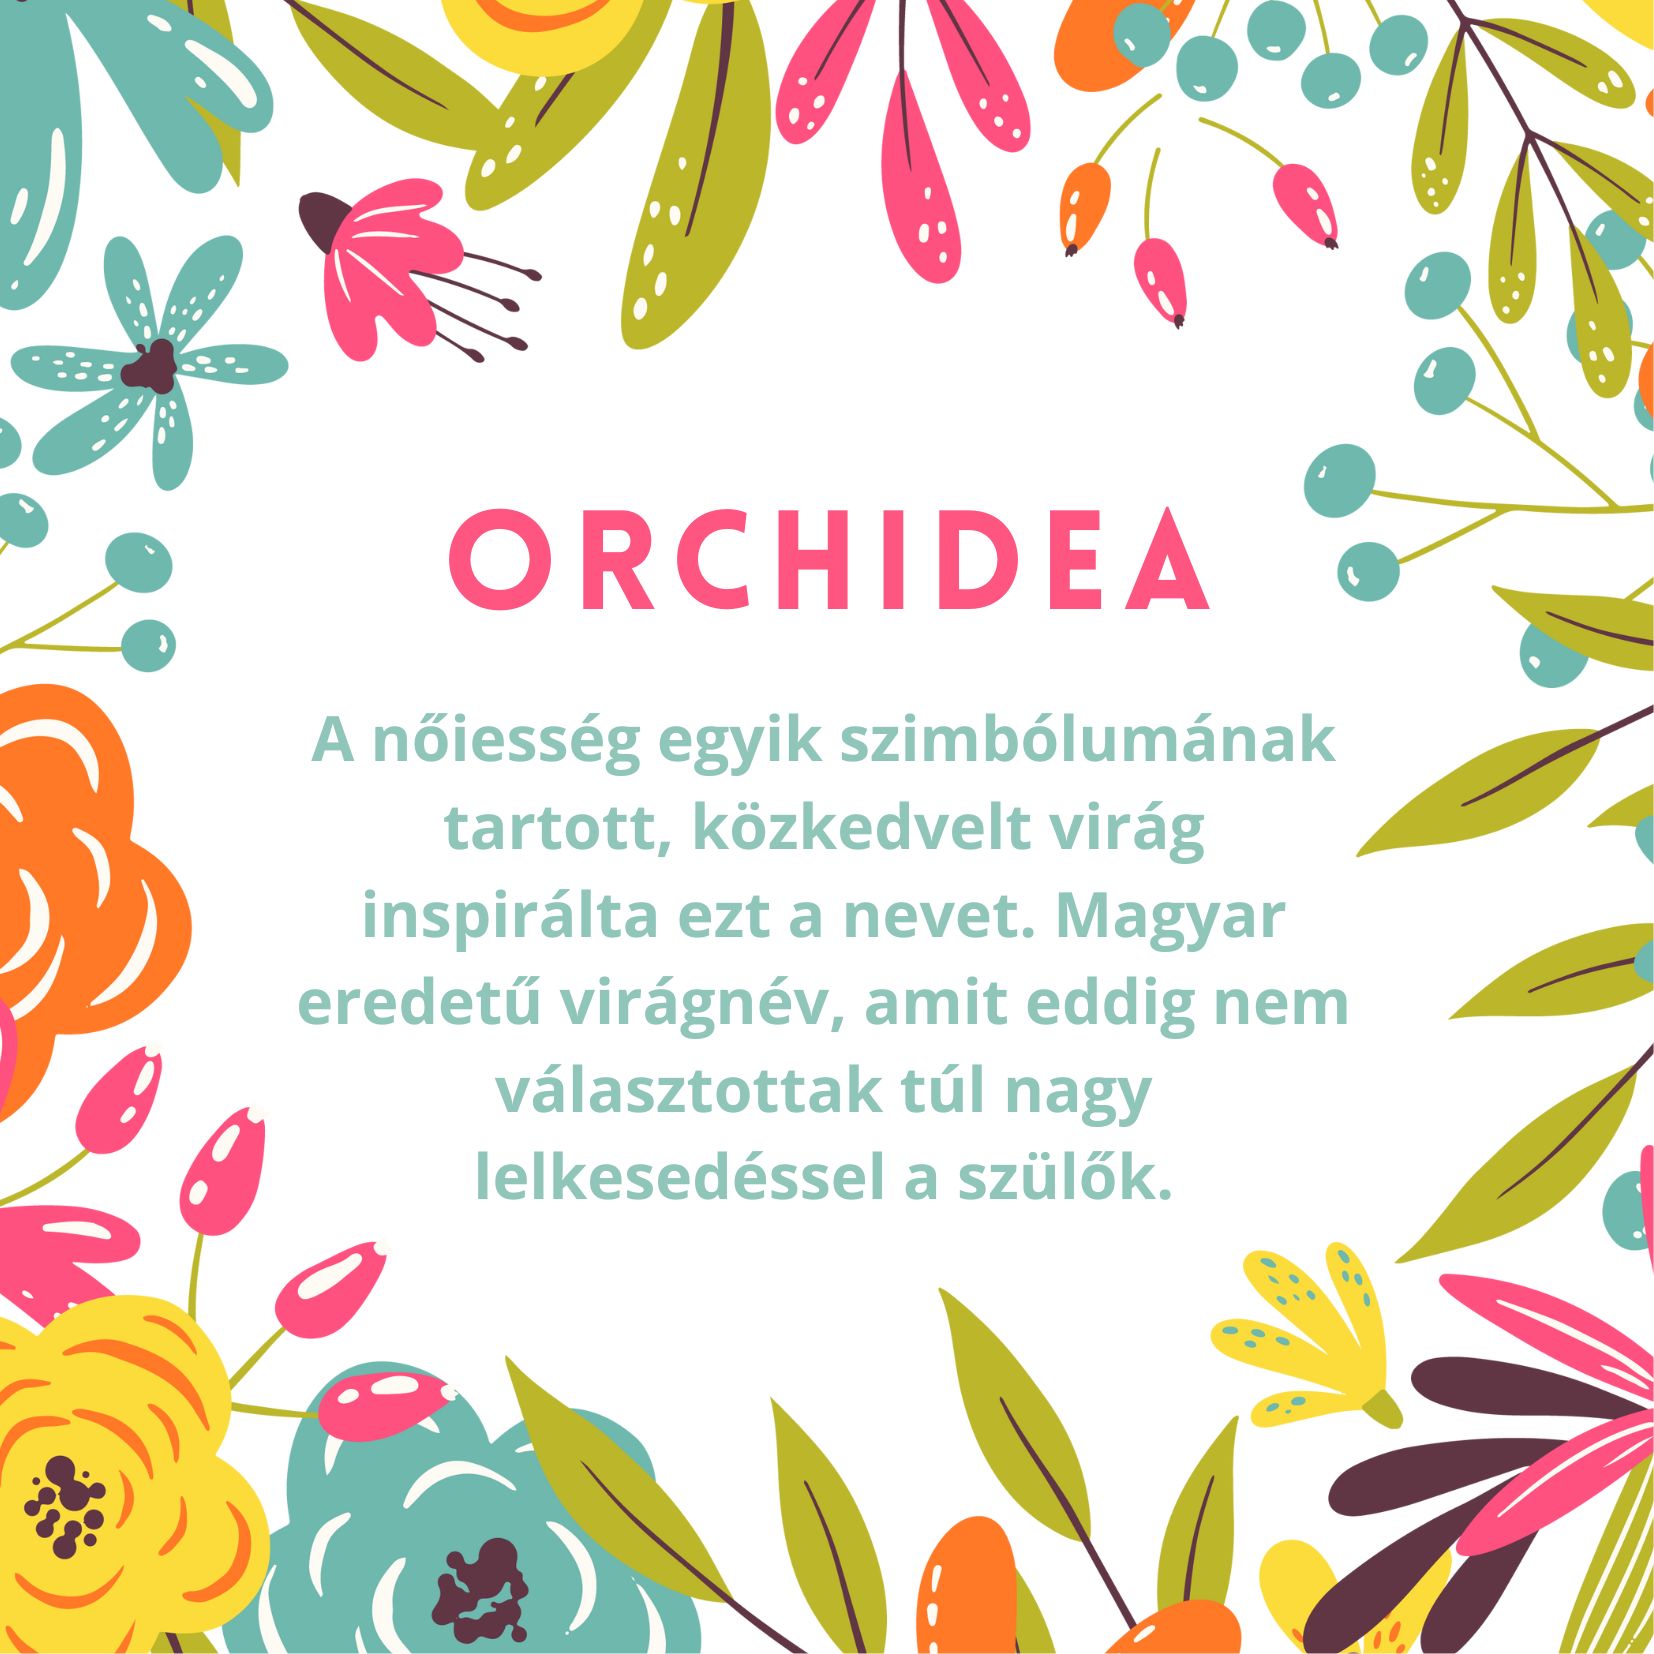 Orchidea név jelentése